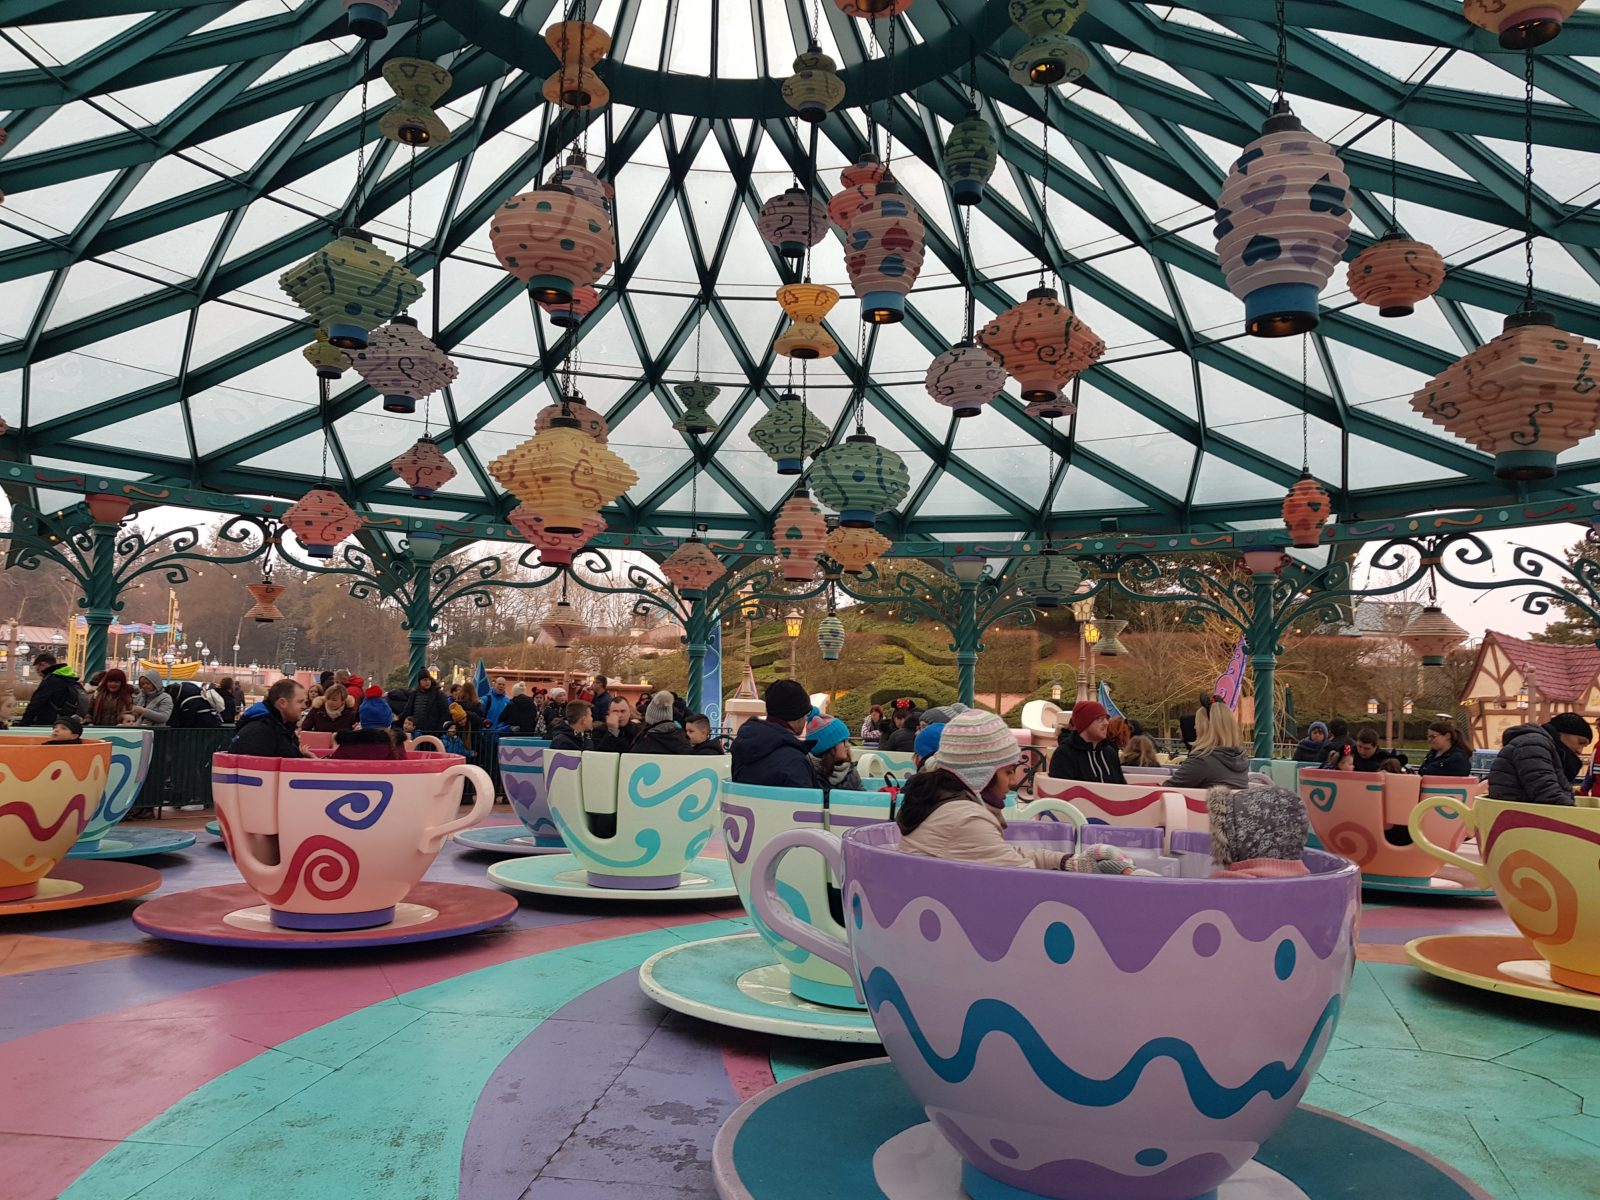 Guests riding the tea cups at Disneyland Paris